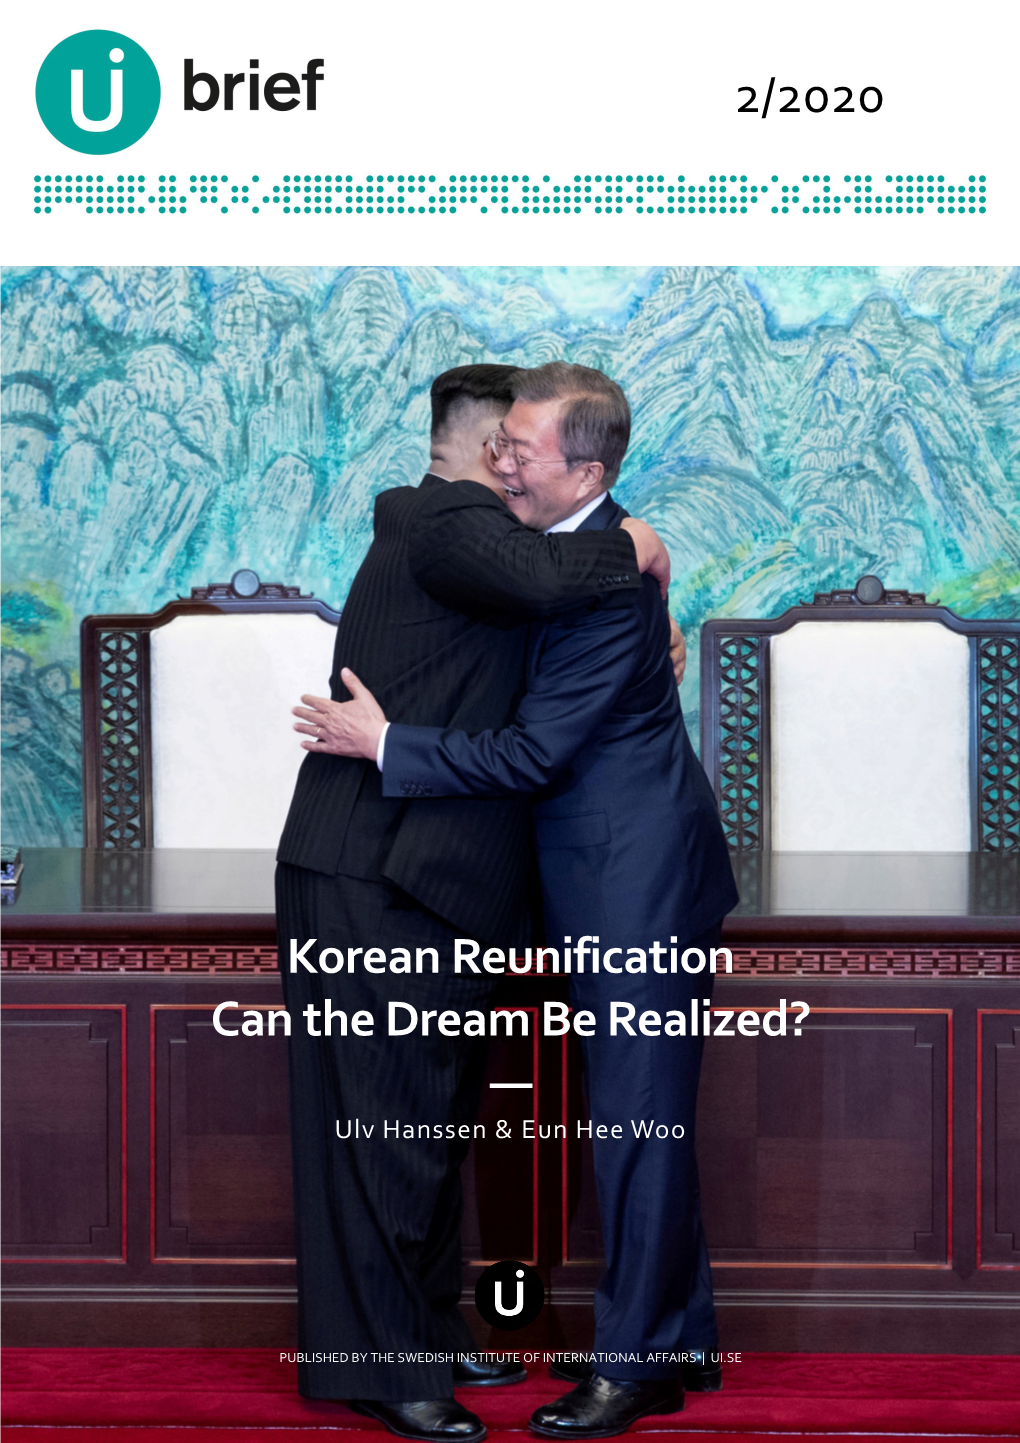 Korean Reunification Can the Dream Be Realized? — Ulv Hanssen & Eun Hee Woo